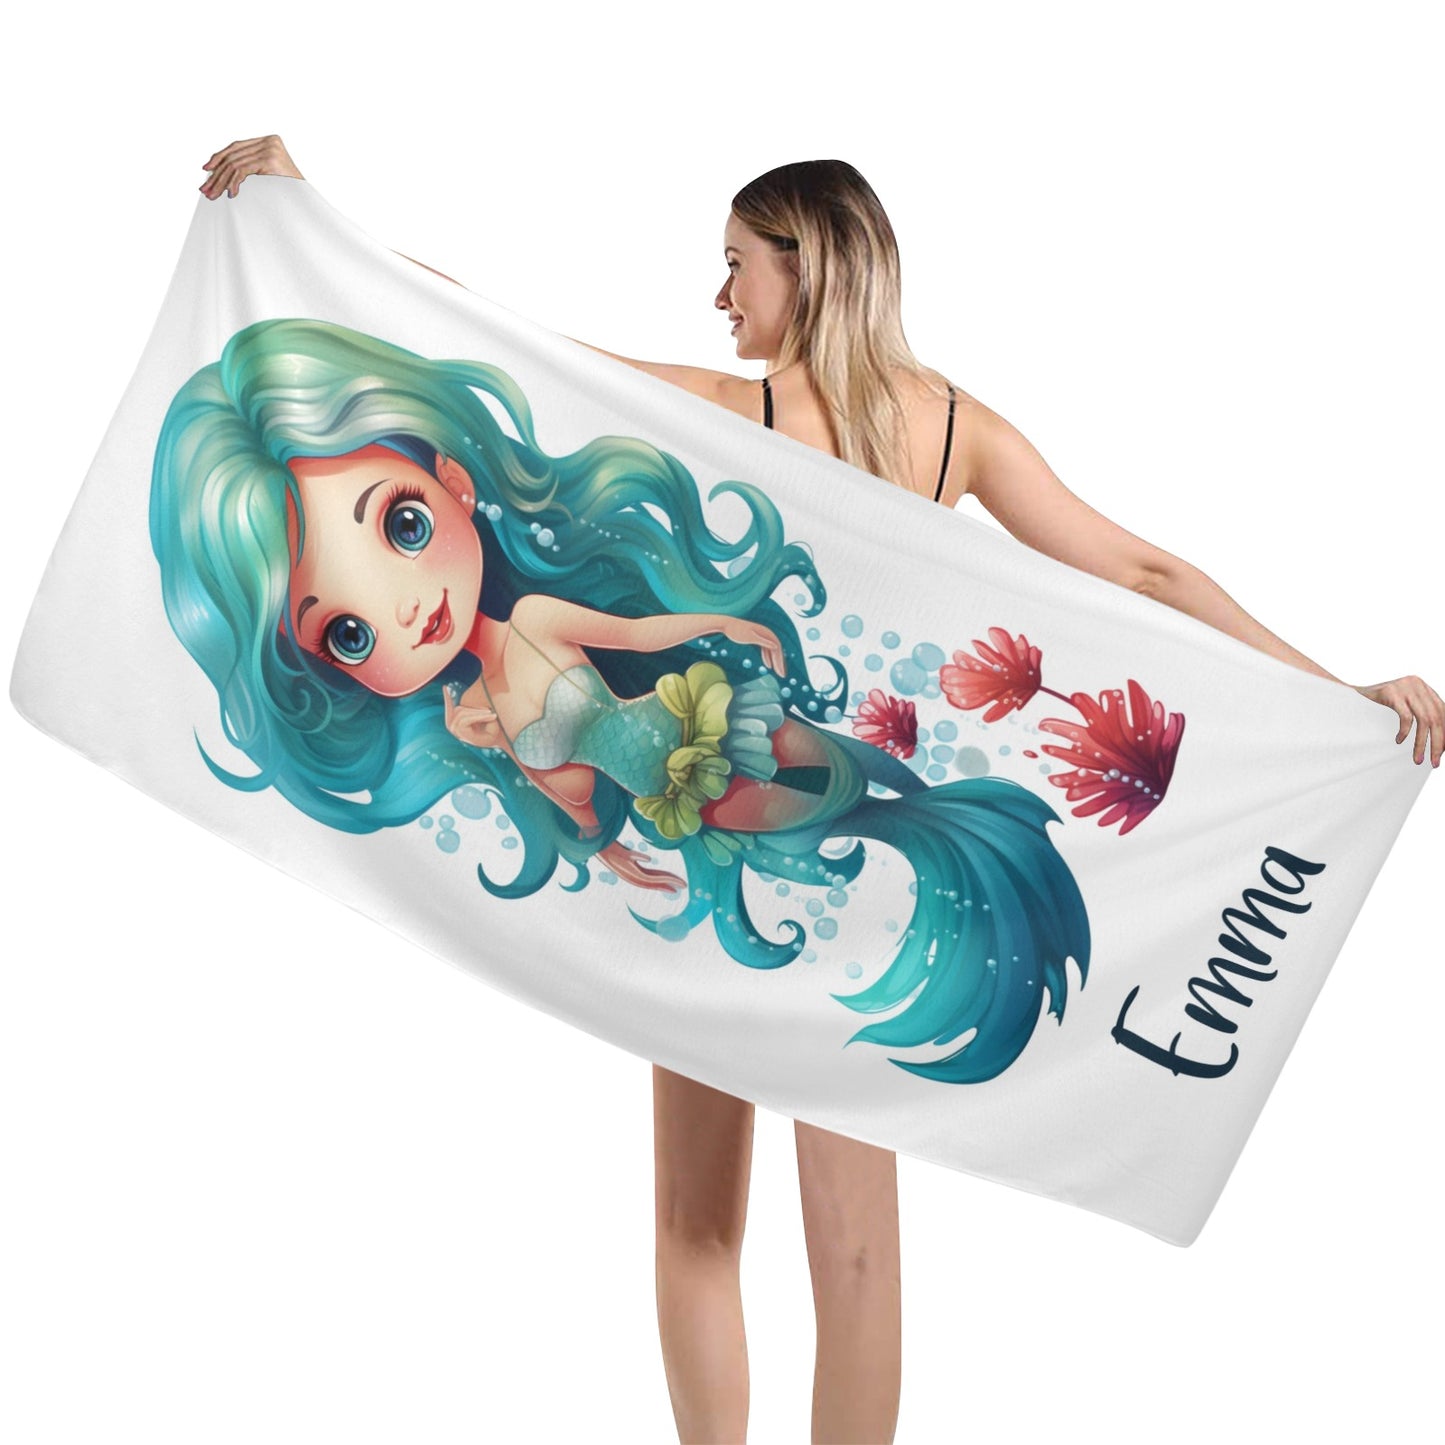 Mermaid Custom Personalized Beach Towel, Name White Pool Microfiber Large Swim Quick Dry Kids Children Adult Girls Women Cotton Blanket